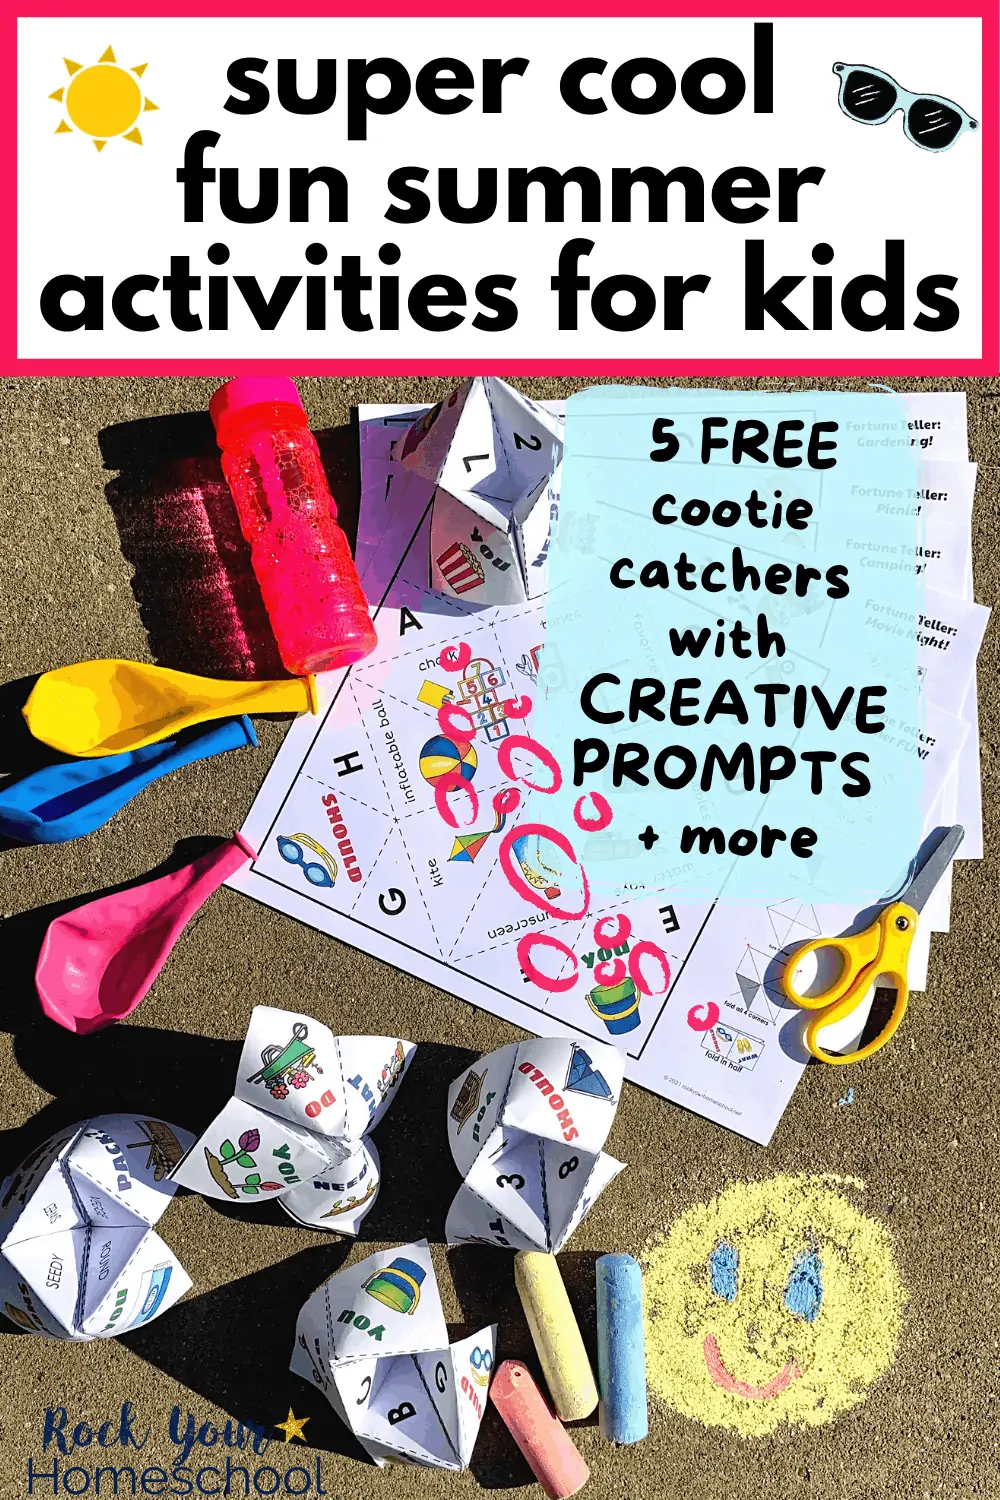 5 Free Cootie Catchers to Inspire Creative Fun Summer Activities for Kids